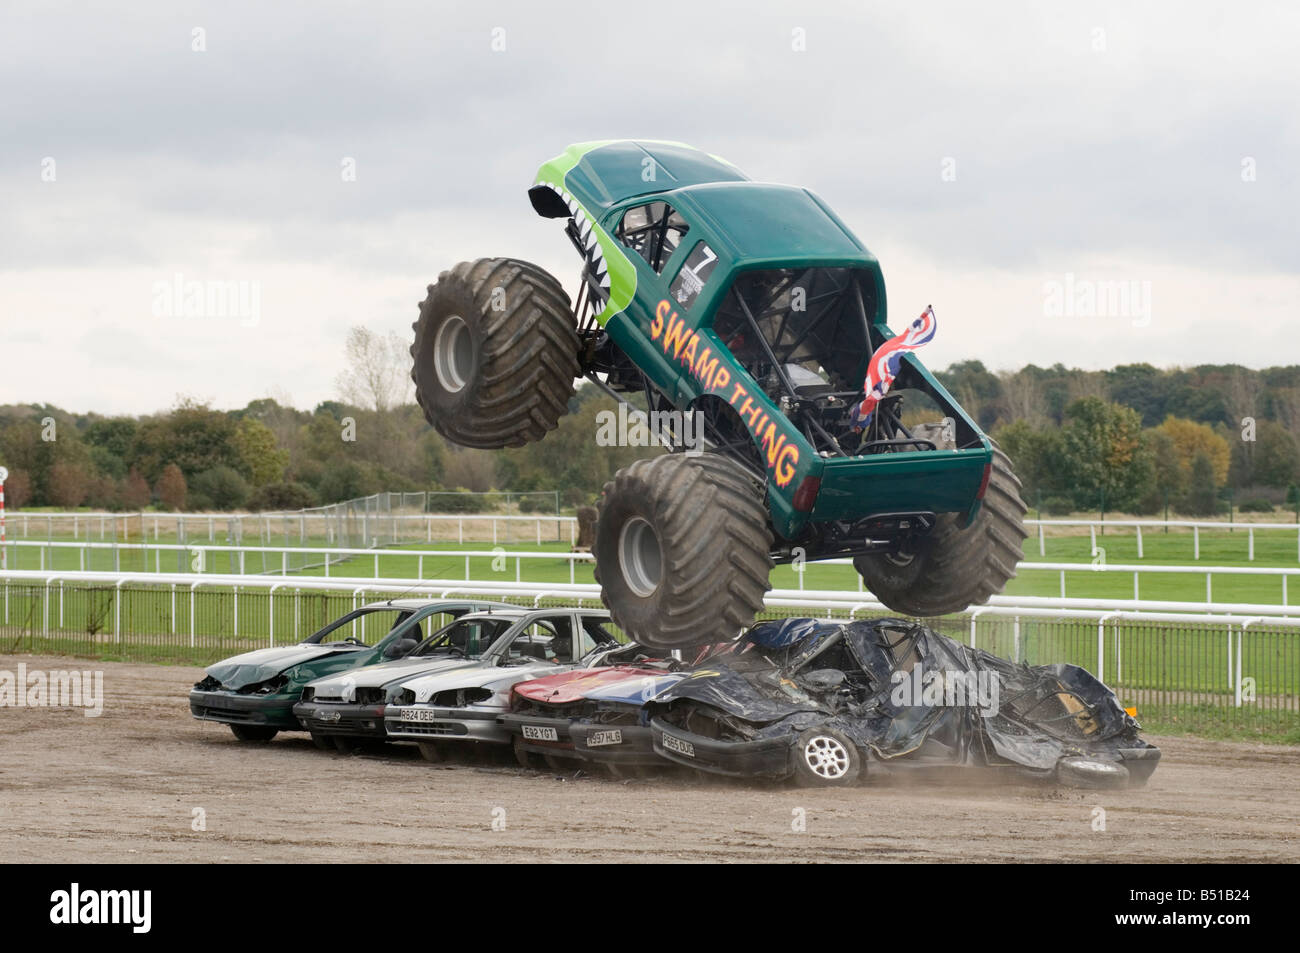 Monster truck grandi ruote camion suv suv offroader 4 da quattro 4X4 bigfoot jump jumping frantumazione frantumazione automobili auto frantumato intrattenere Foto Stock